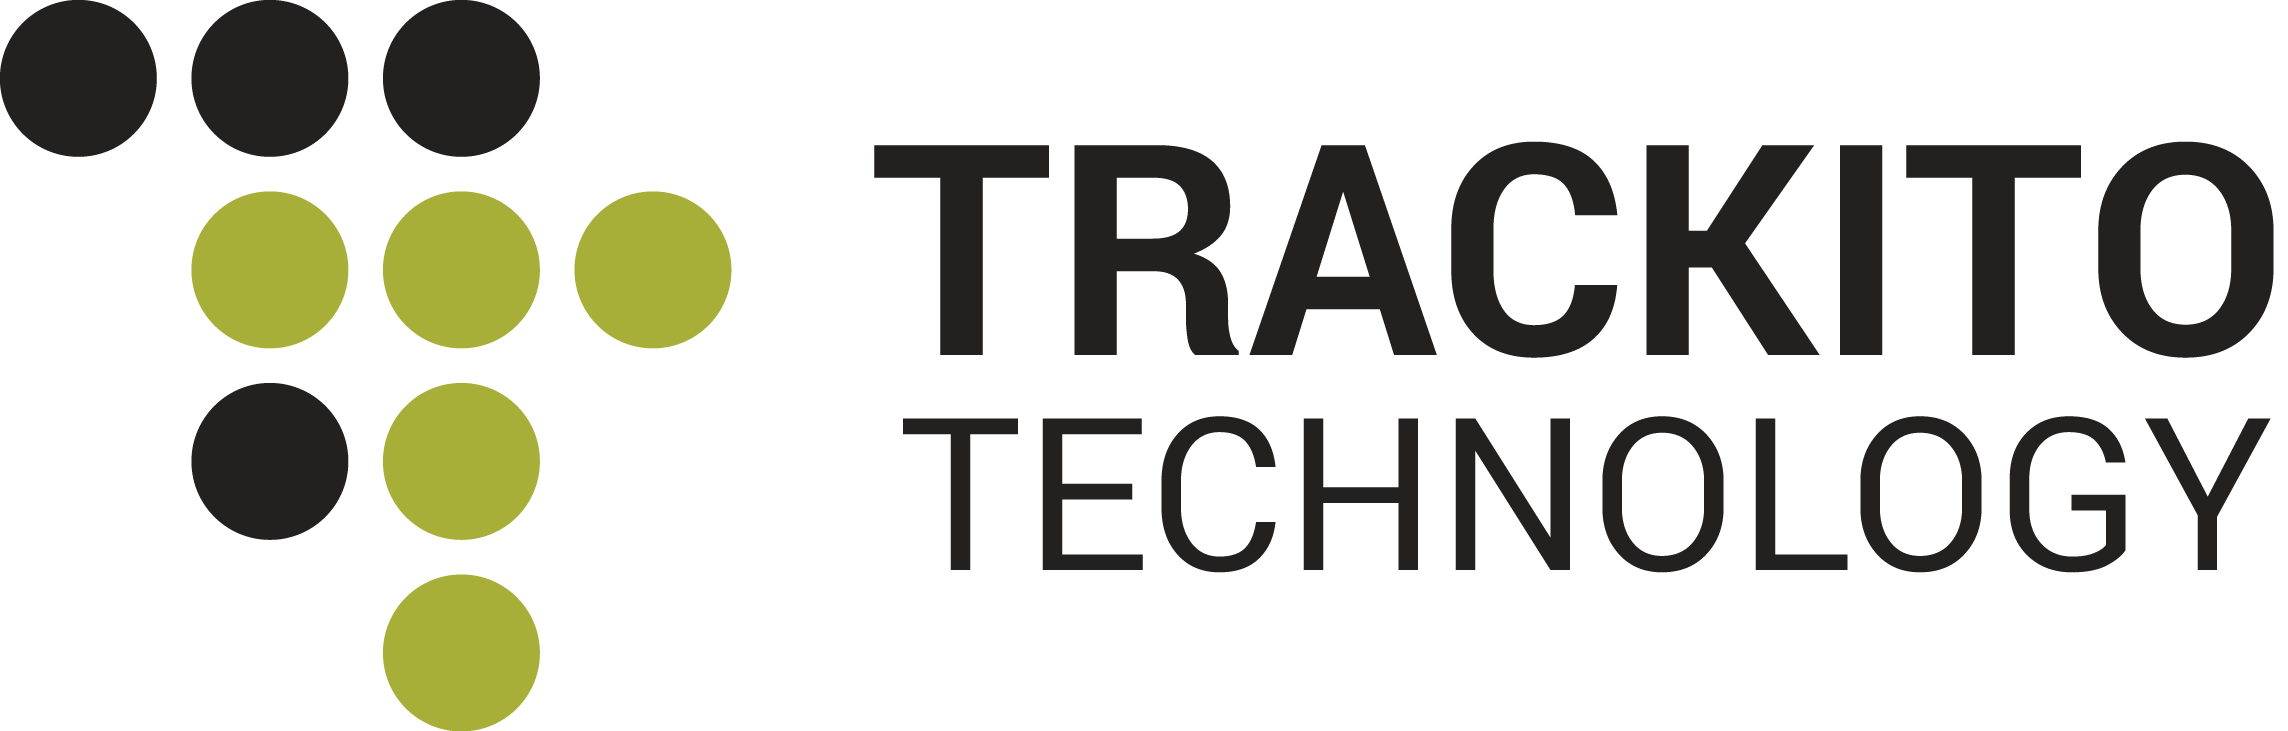 Trackito Car :: Trackito Technology E-shop